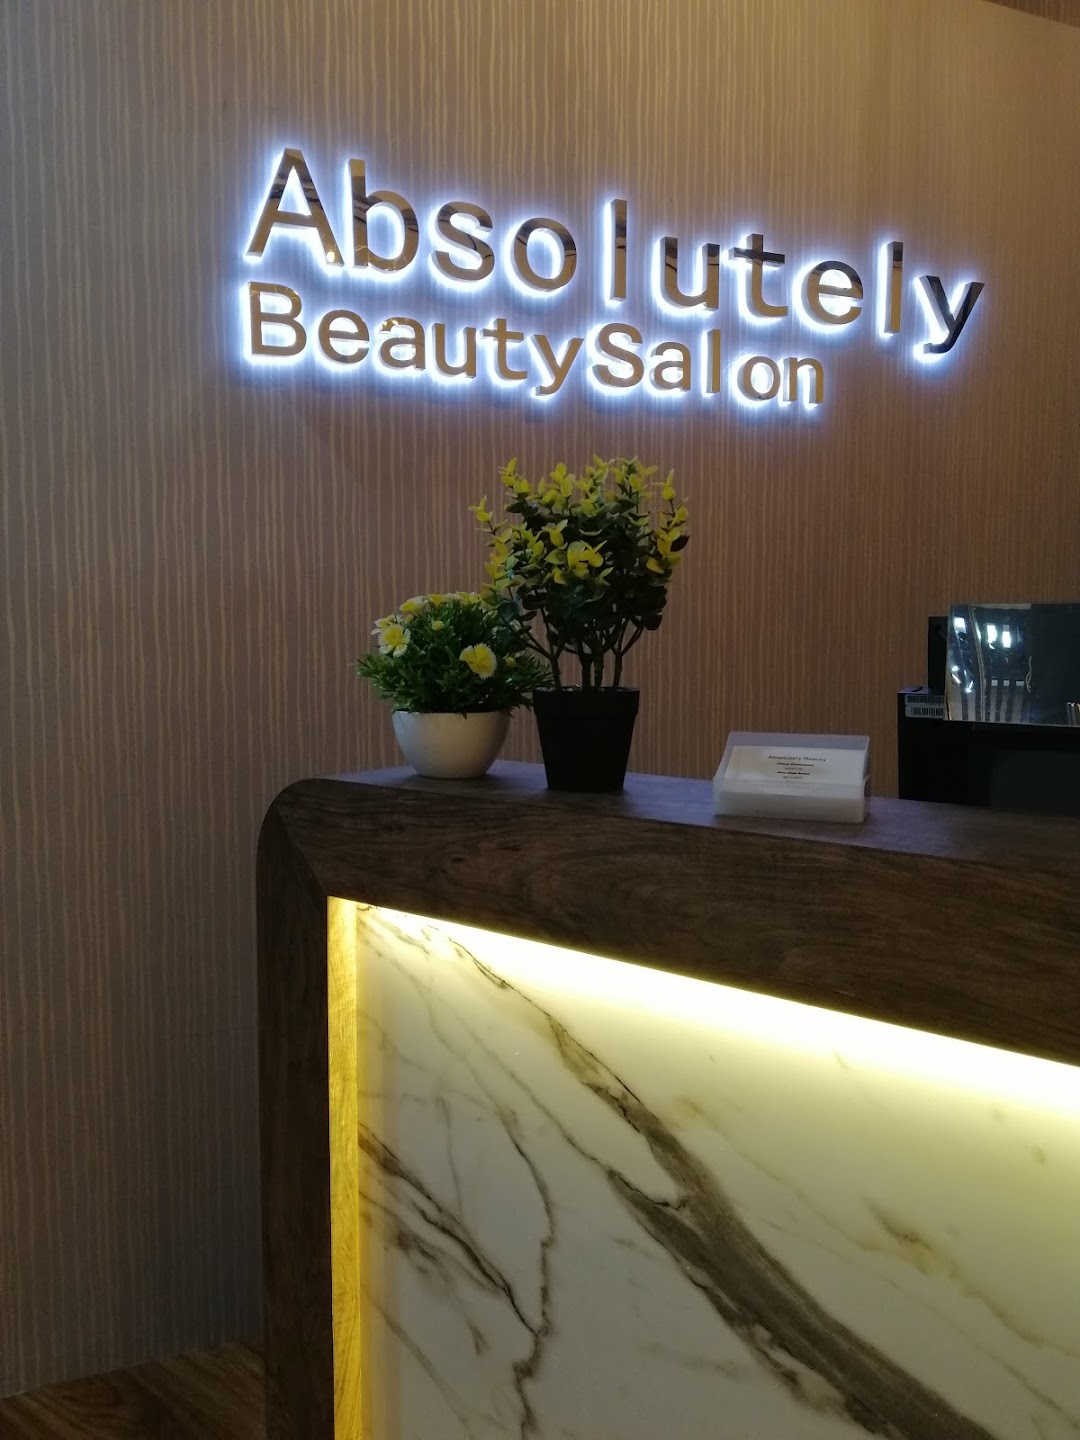 Absolutely Beauty Salon